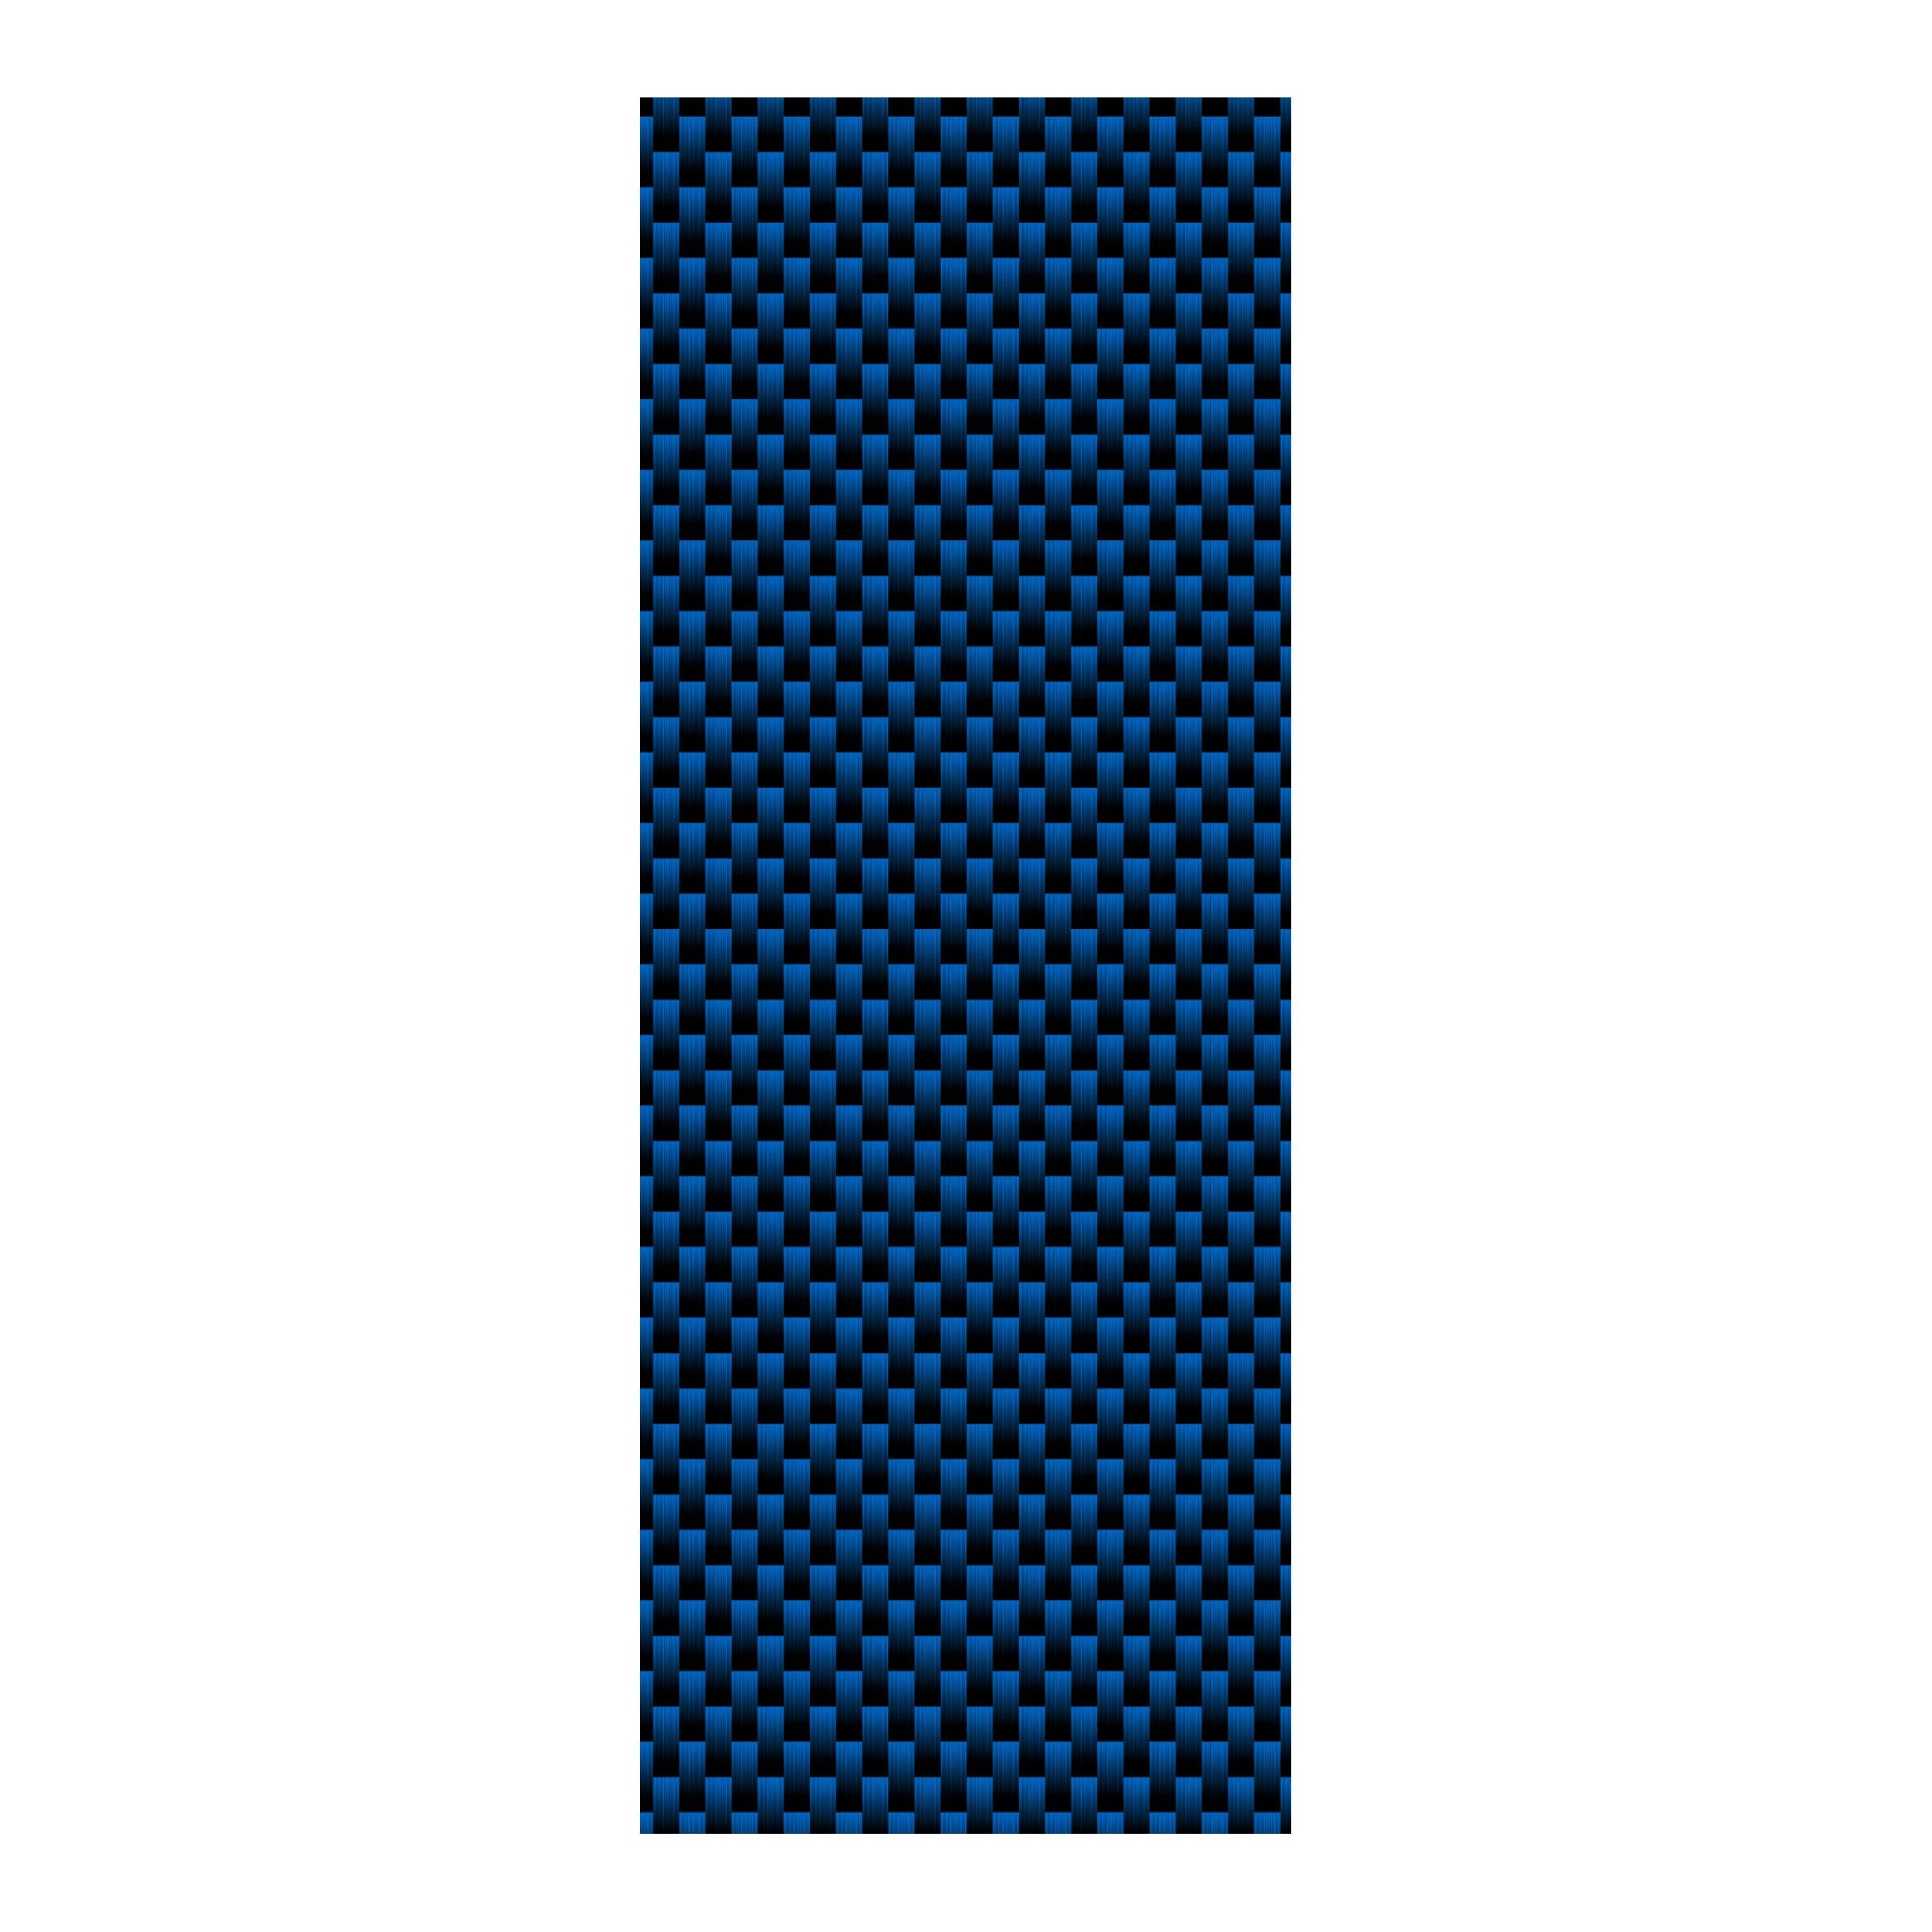 #design_carbon fiber (blue)